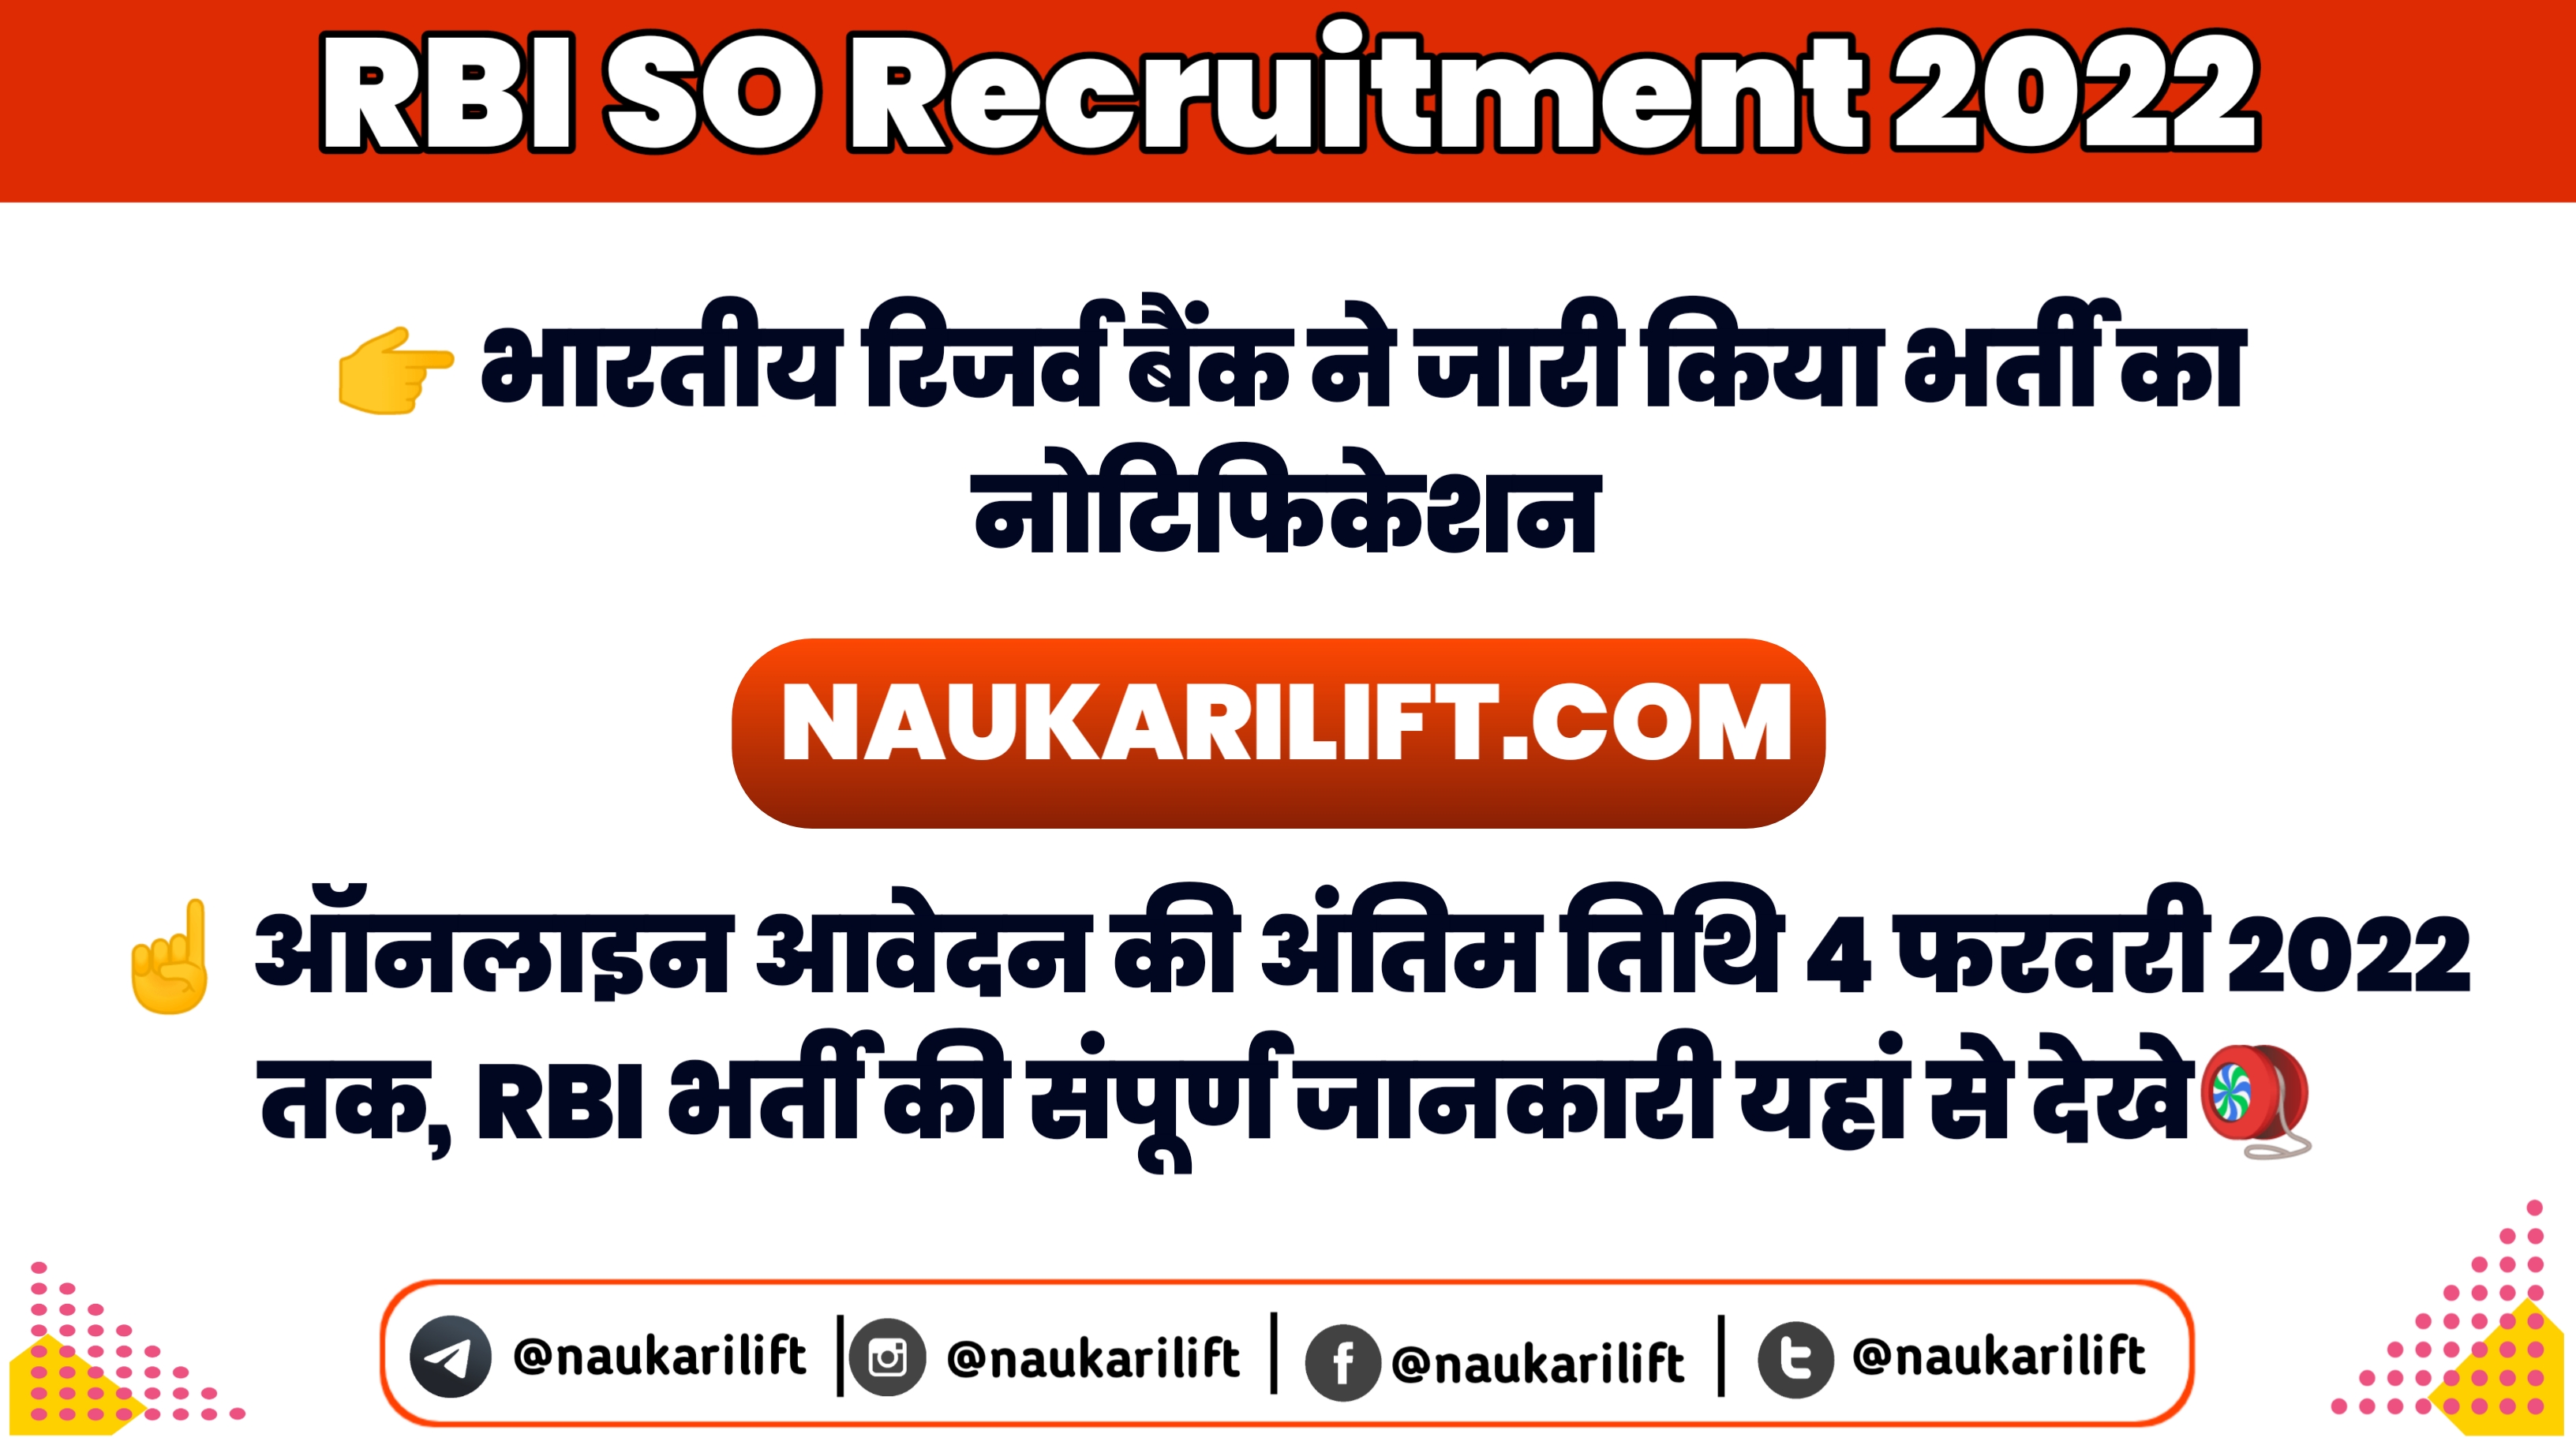 RBI SO Recruitment 2022 Online Form For 14 Post आरबीआई स्पेशलिस्ट ऑफिसर भर्ती 2022